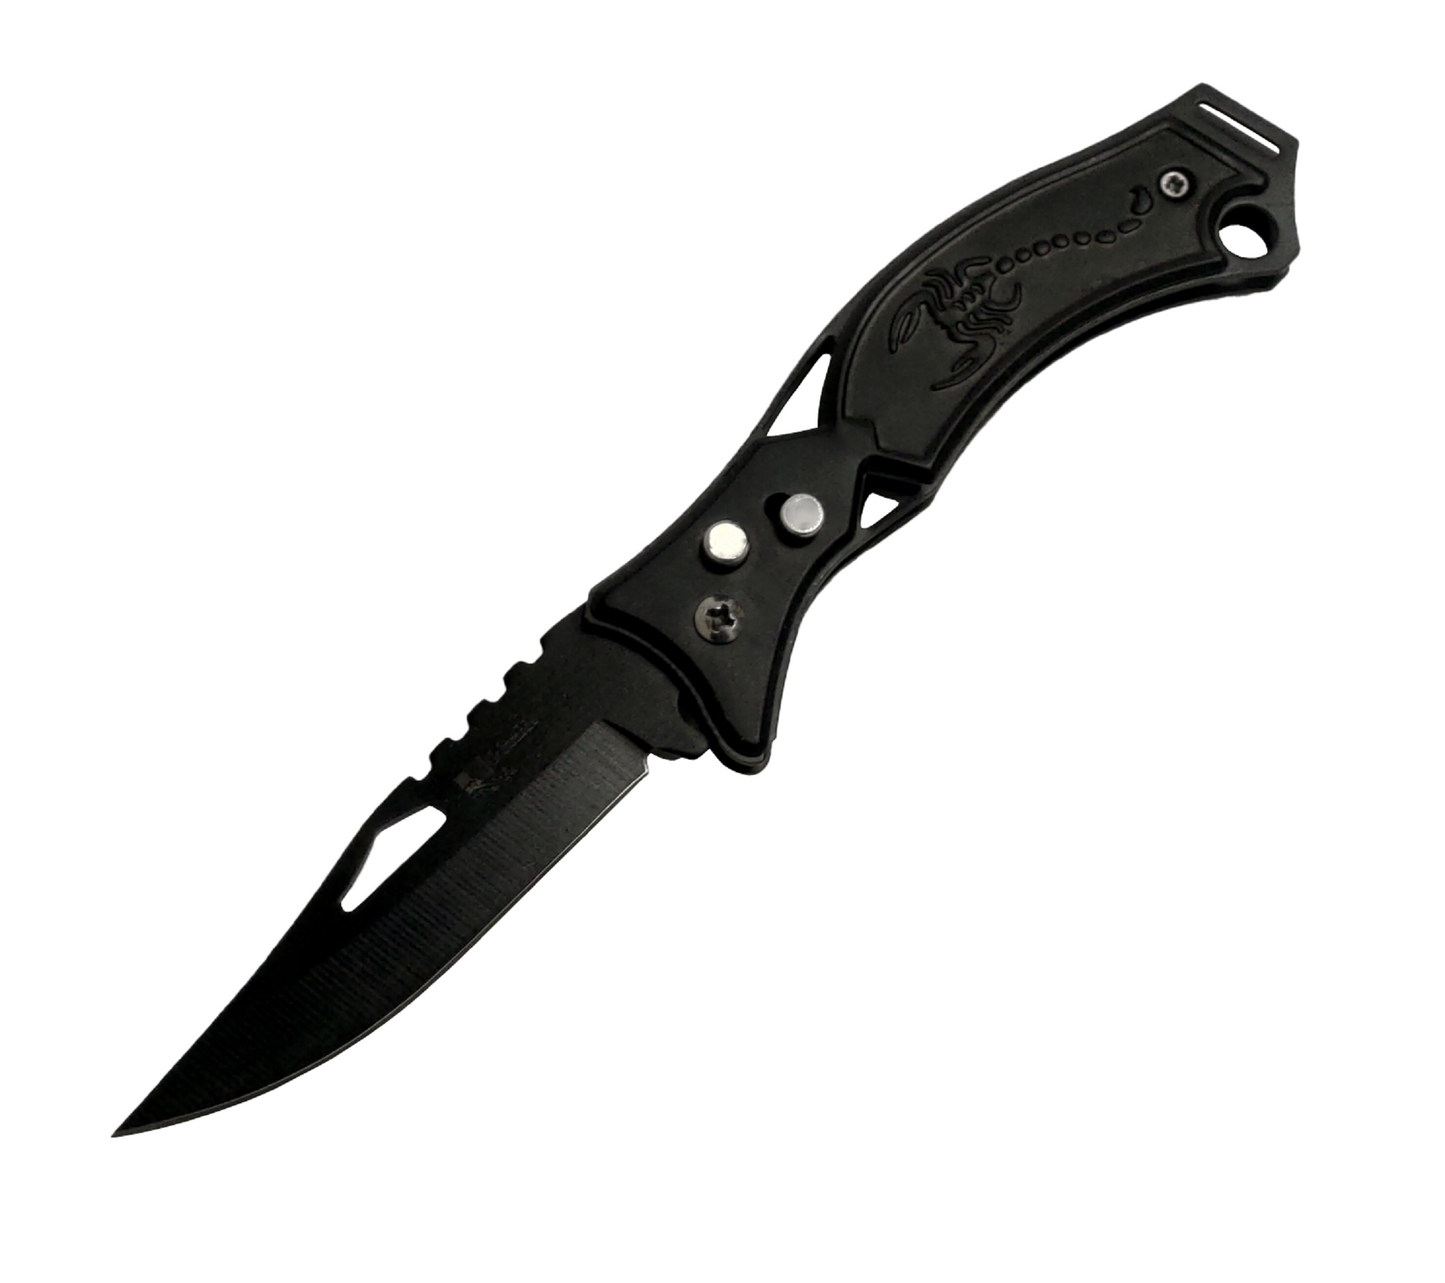 BLACK SCORPION ENGRAVED FOLDING KNIFE WITH SAFETY LOCK